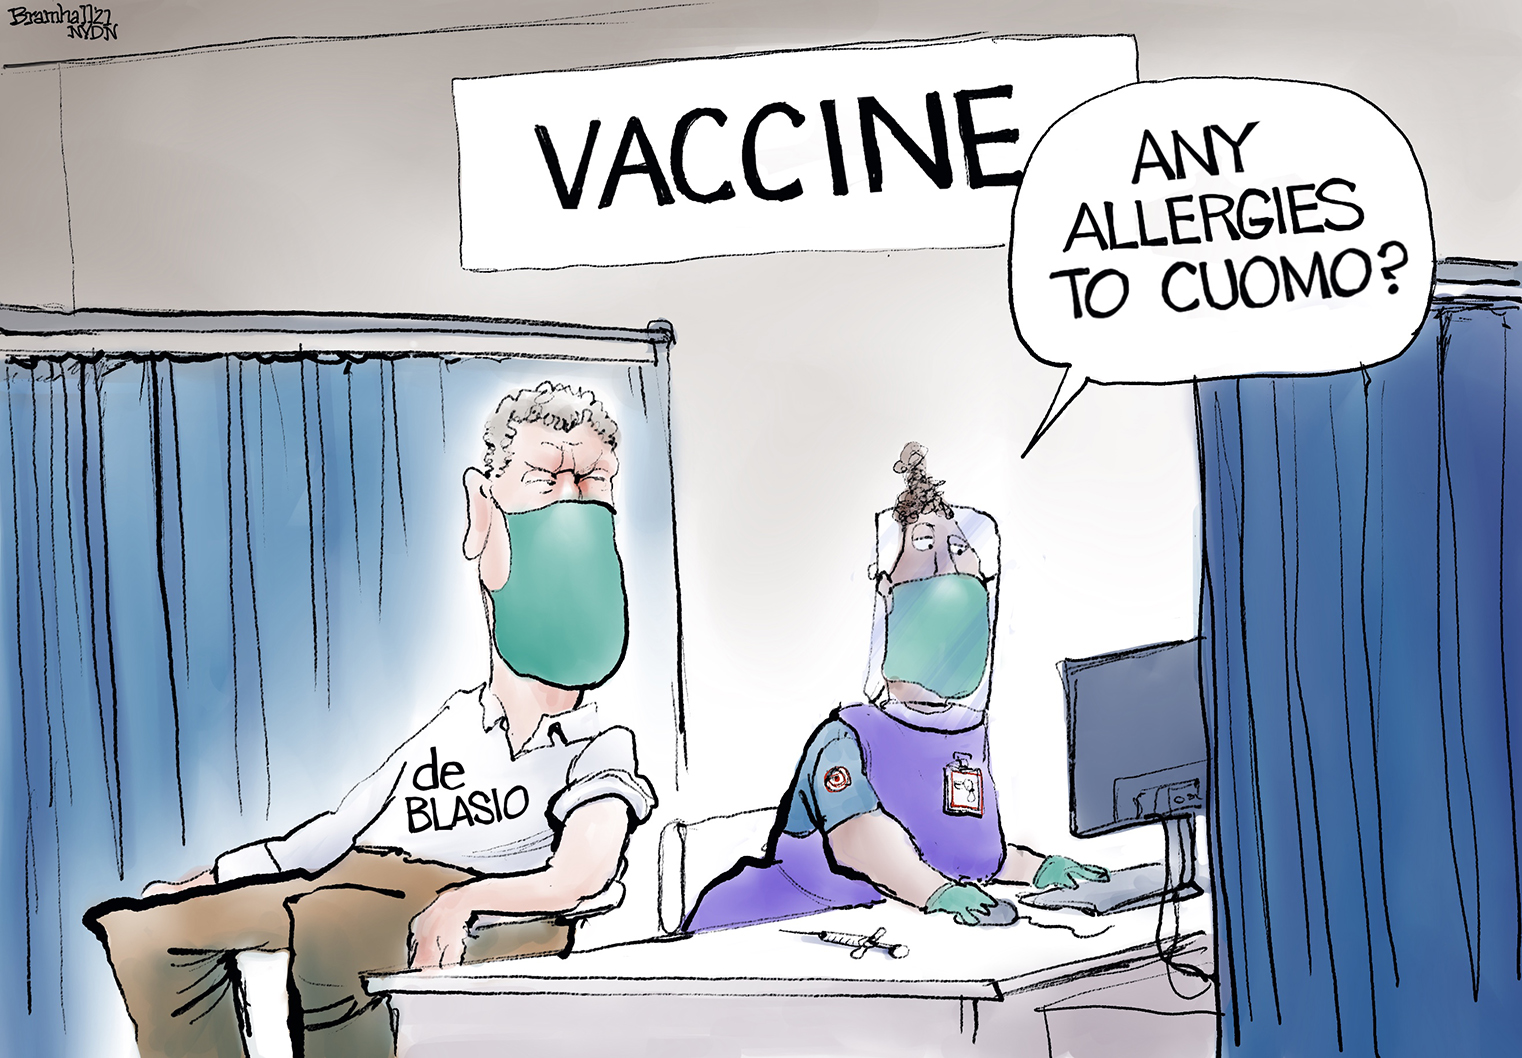 Political Cartoon U.S. de blasio cuomo covid vaccine